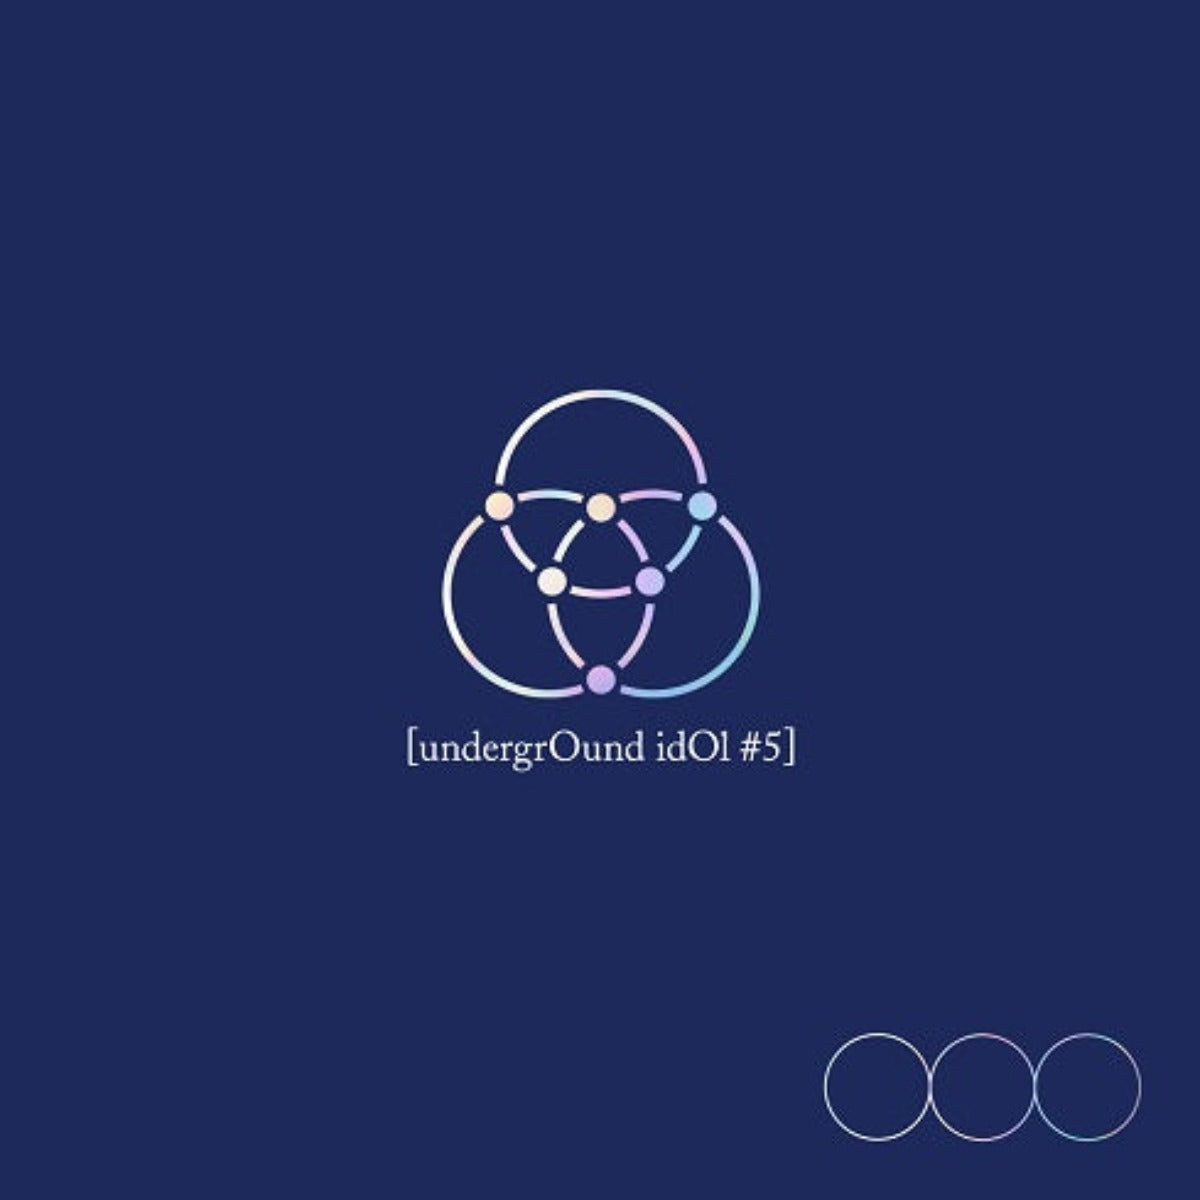 OnlyOneOf: Mill Single Album Vol. 1 - undergrOund idOl #5